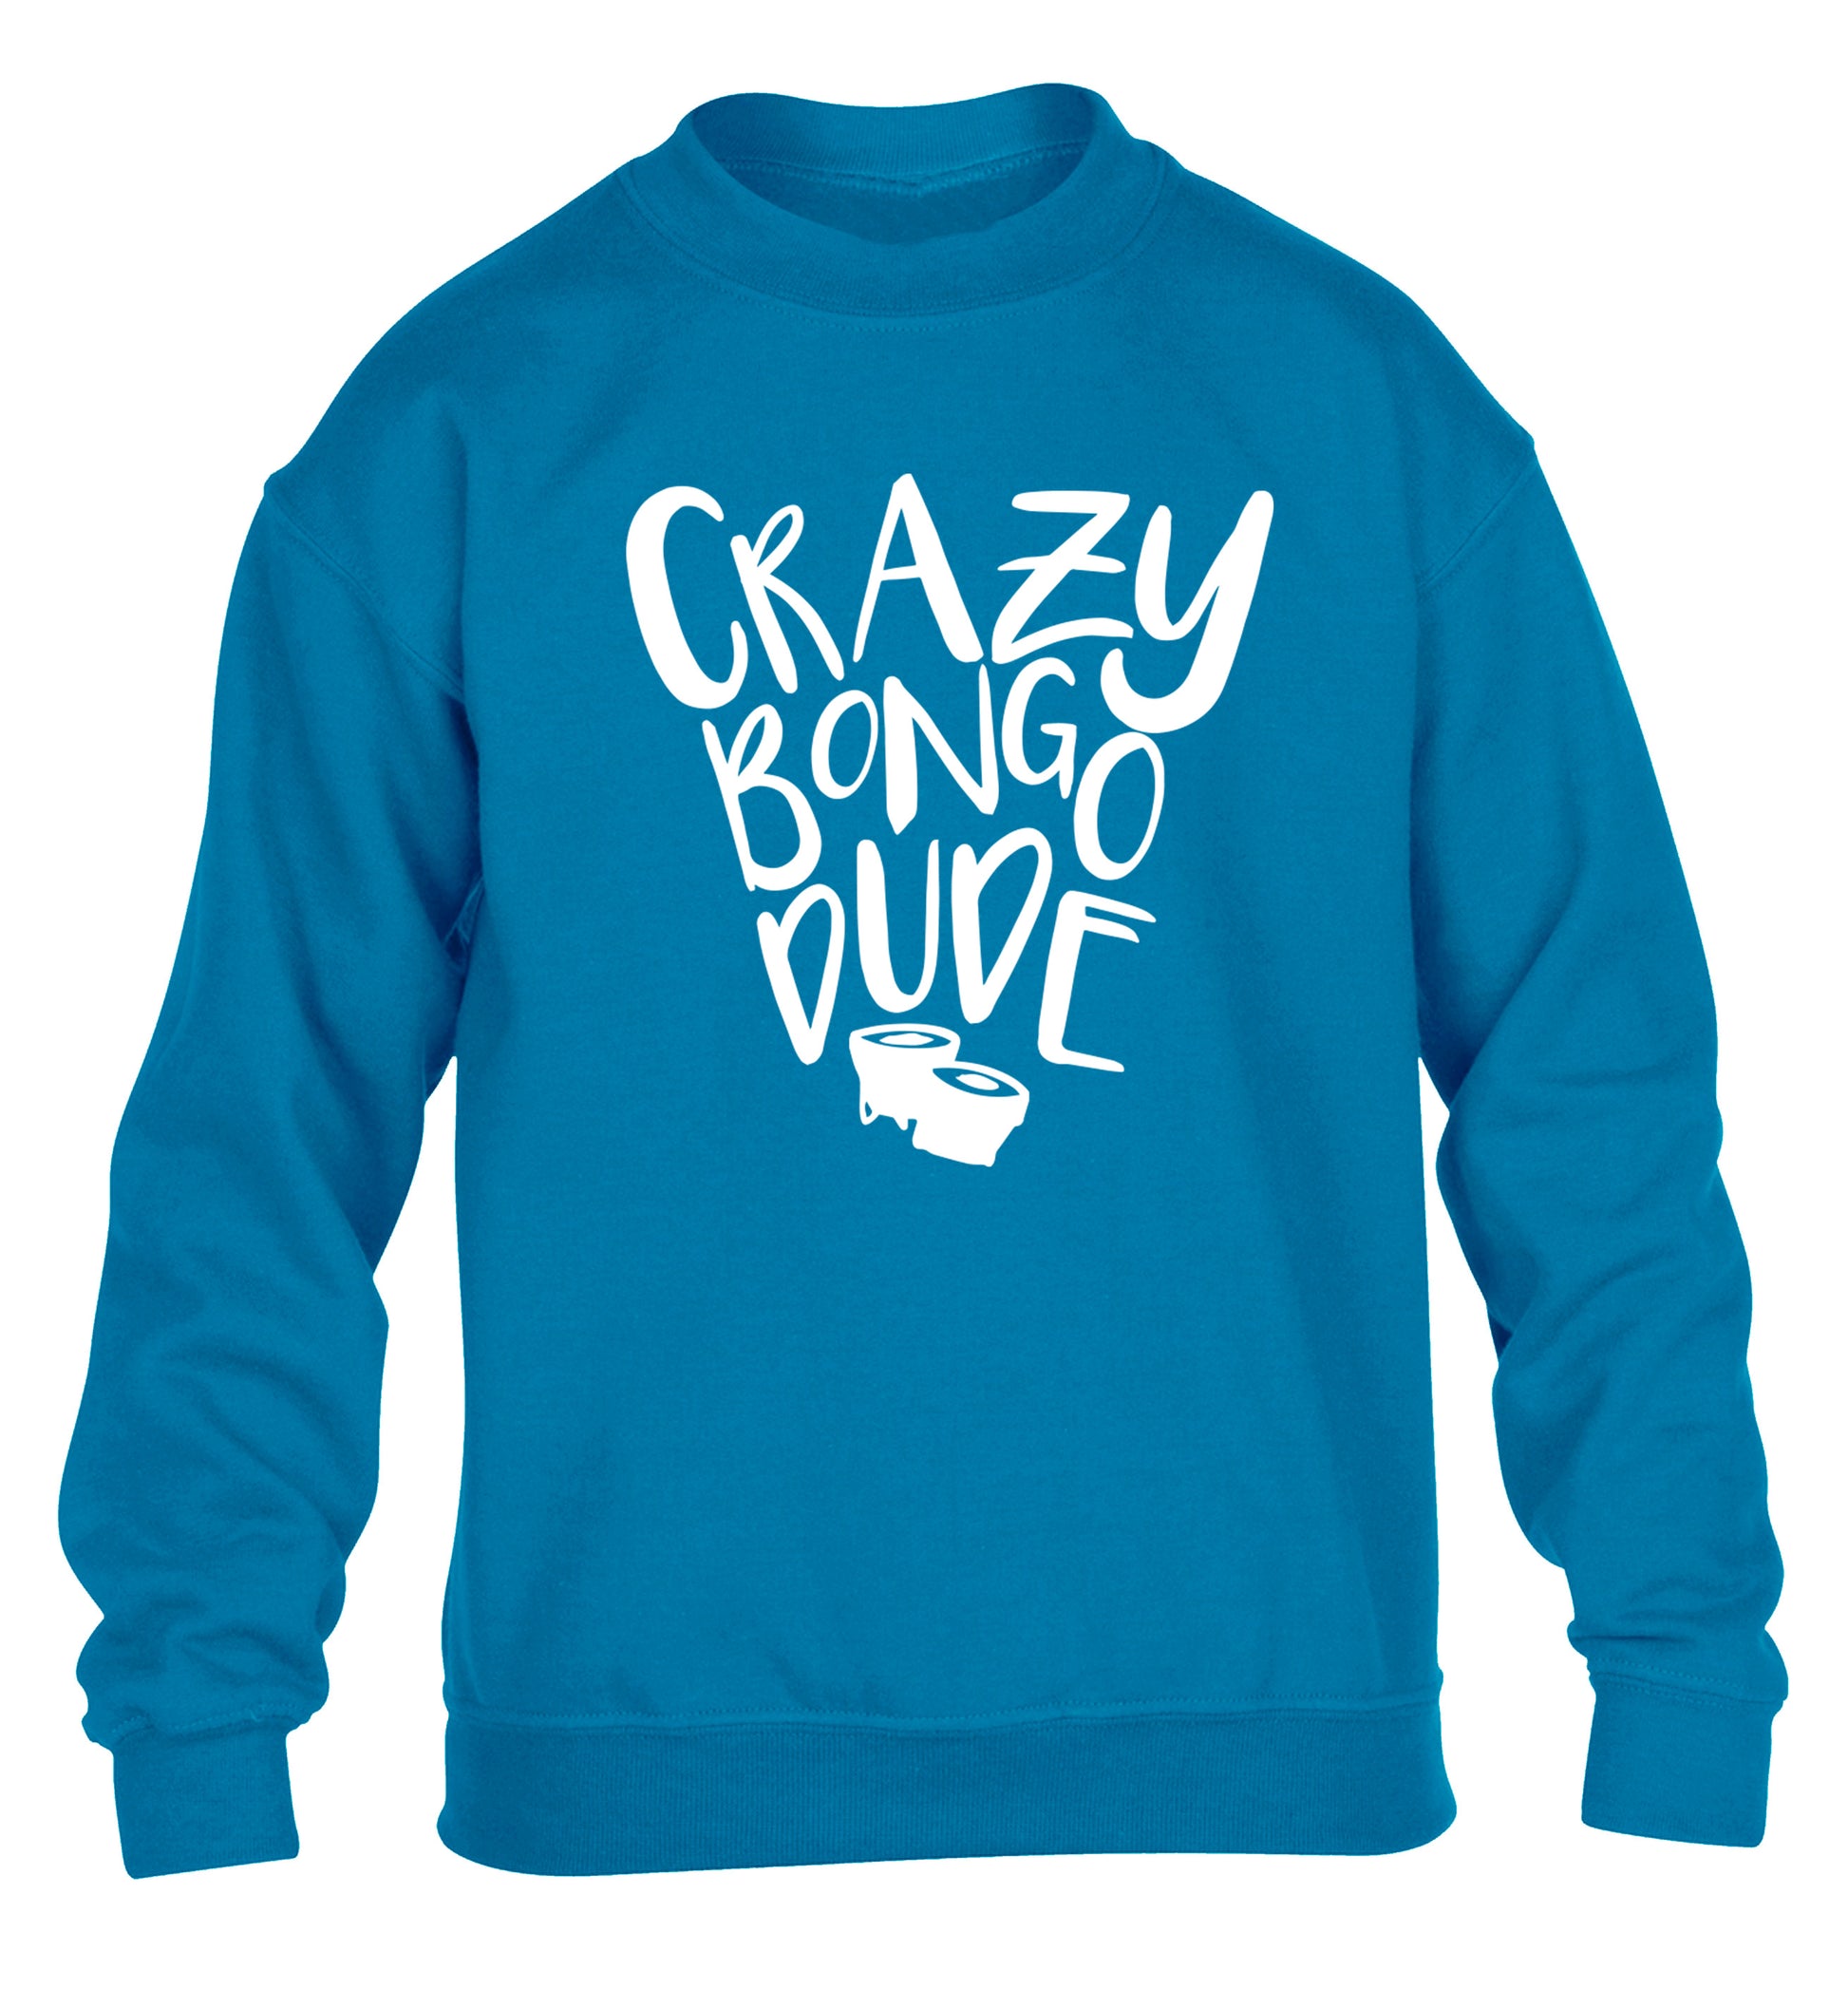 Crazy bongo dude children's blue sweater 12-14 Years